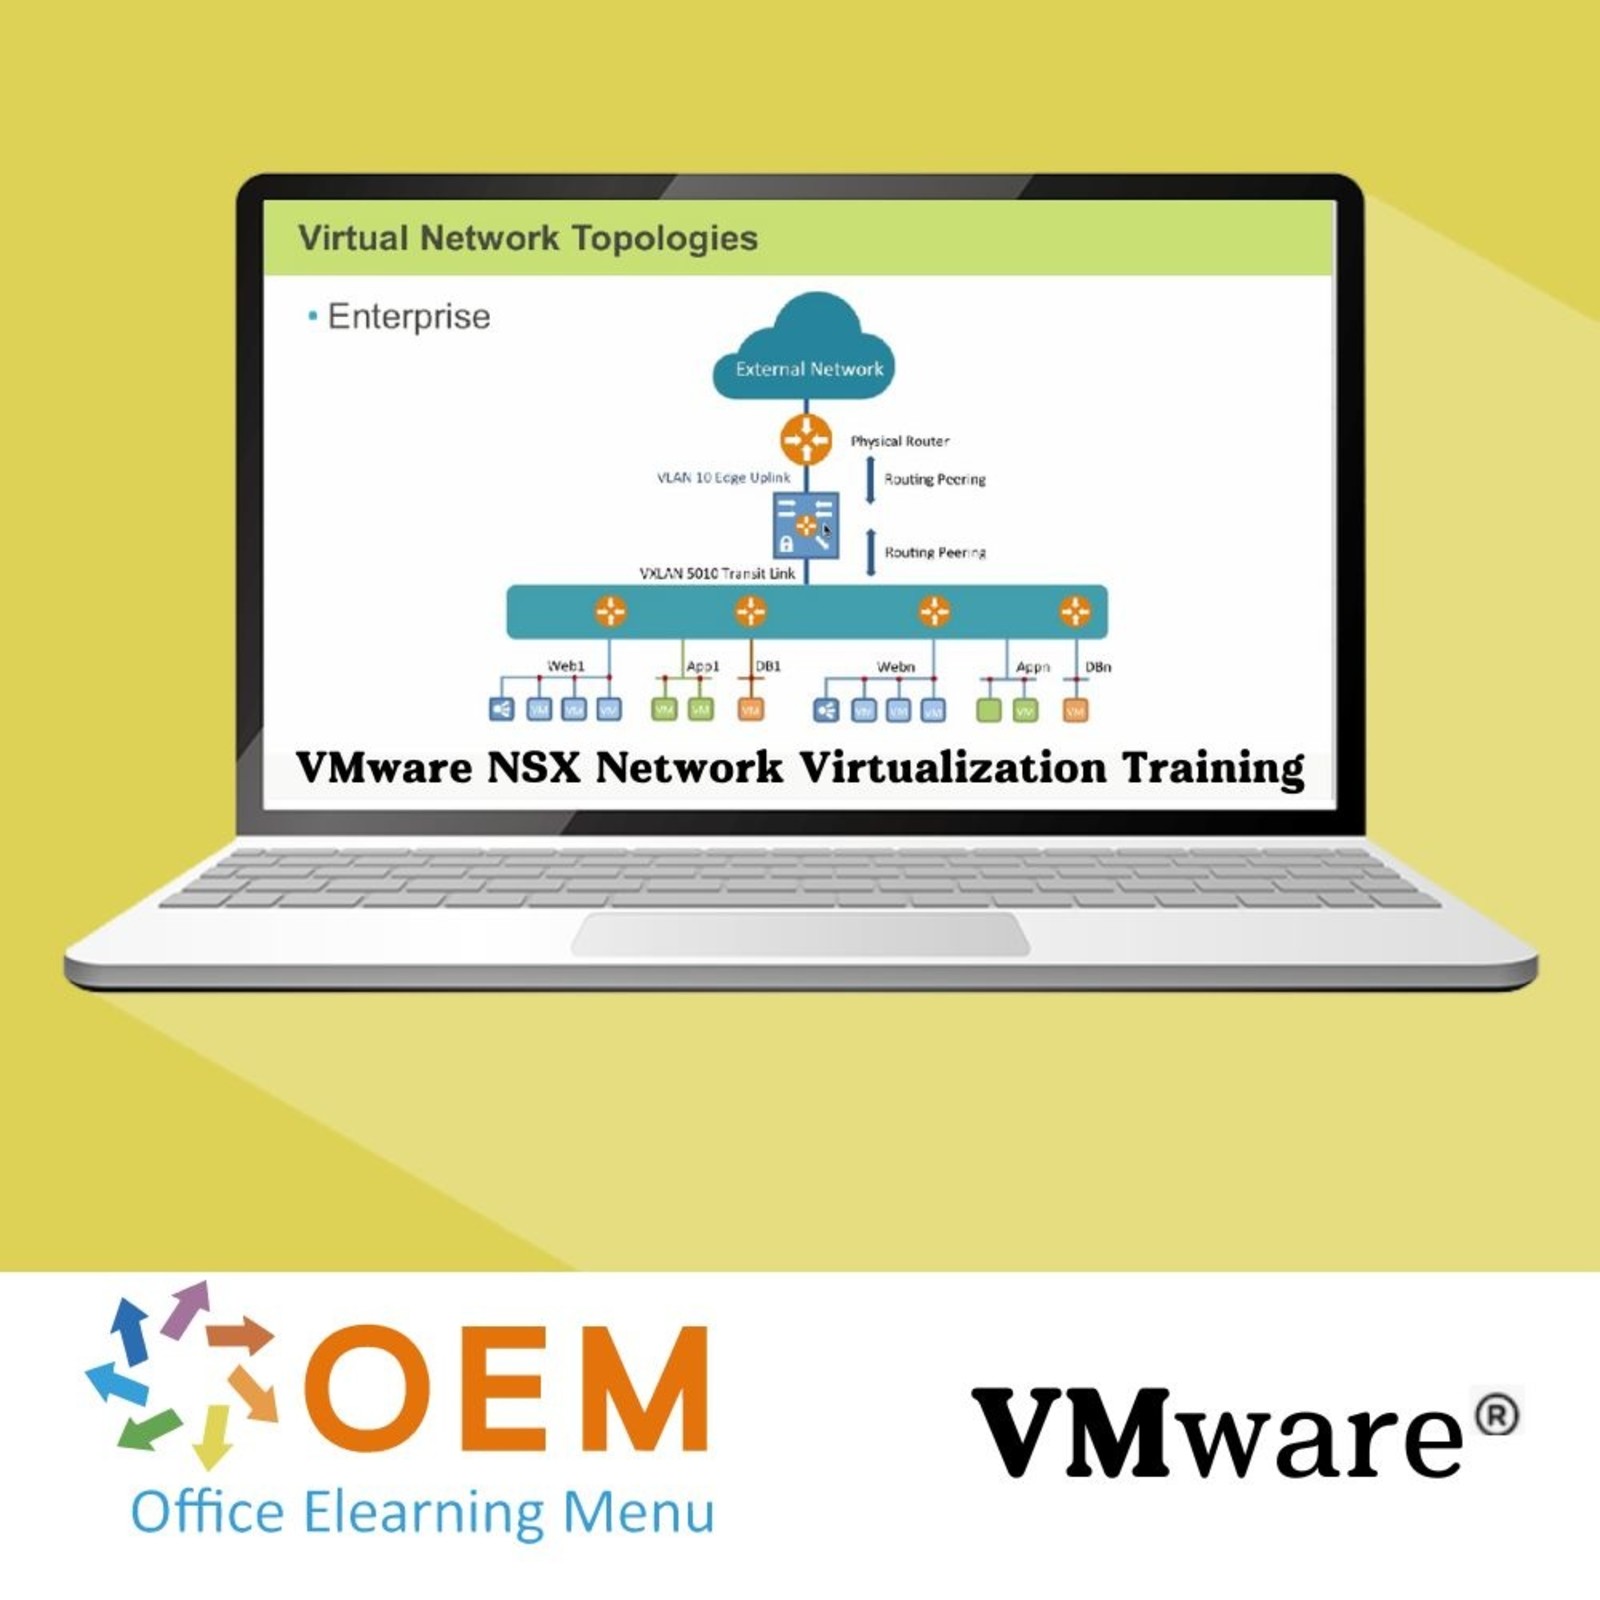 VMware VMware NSX Network Virtualization Training